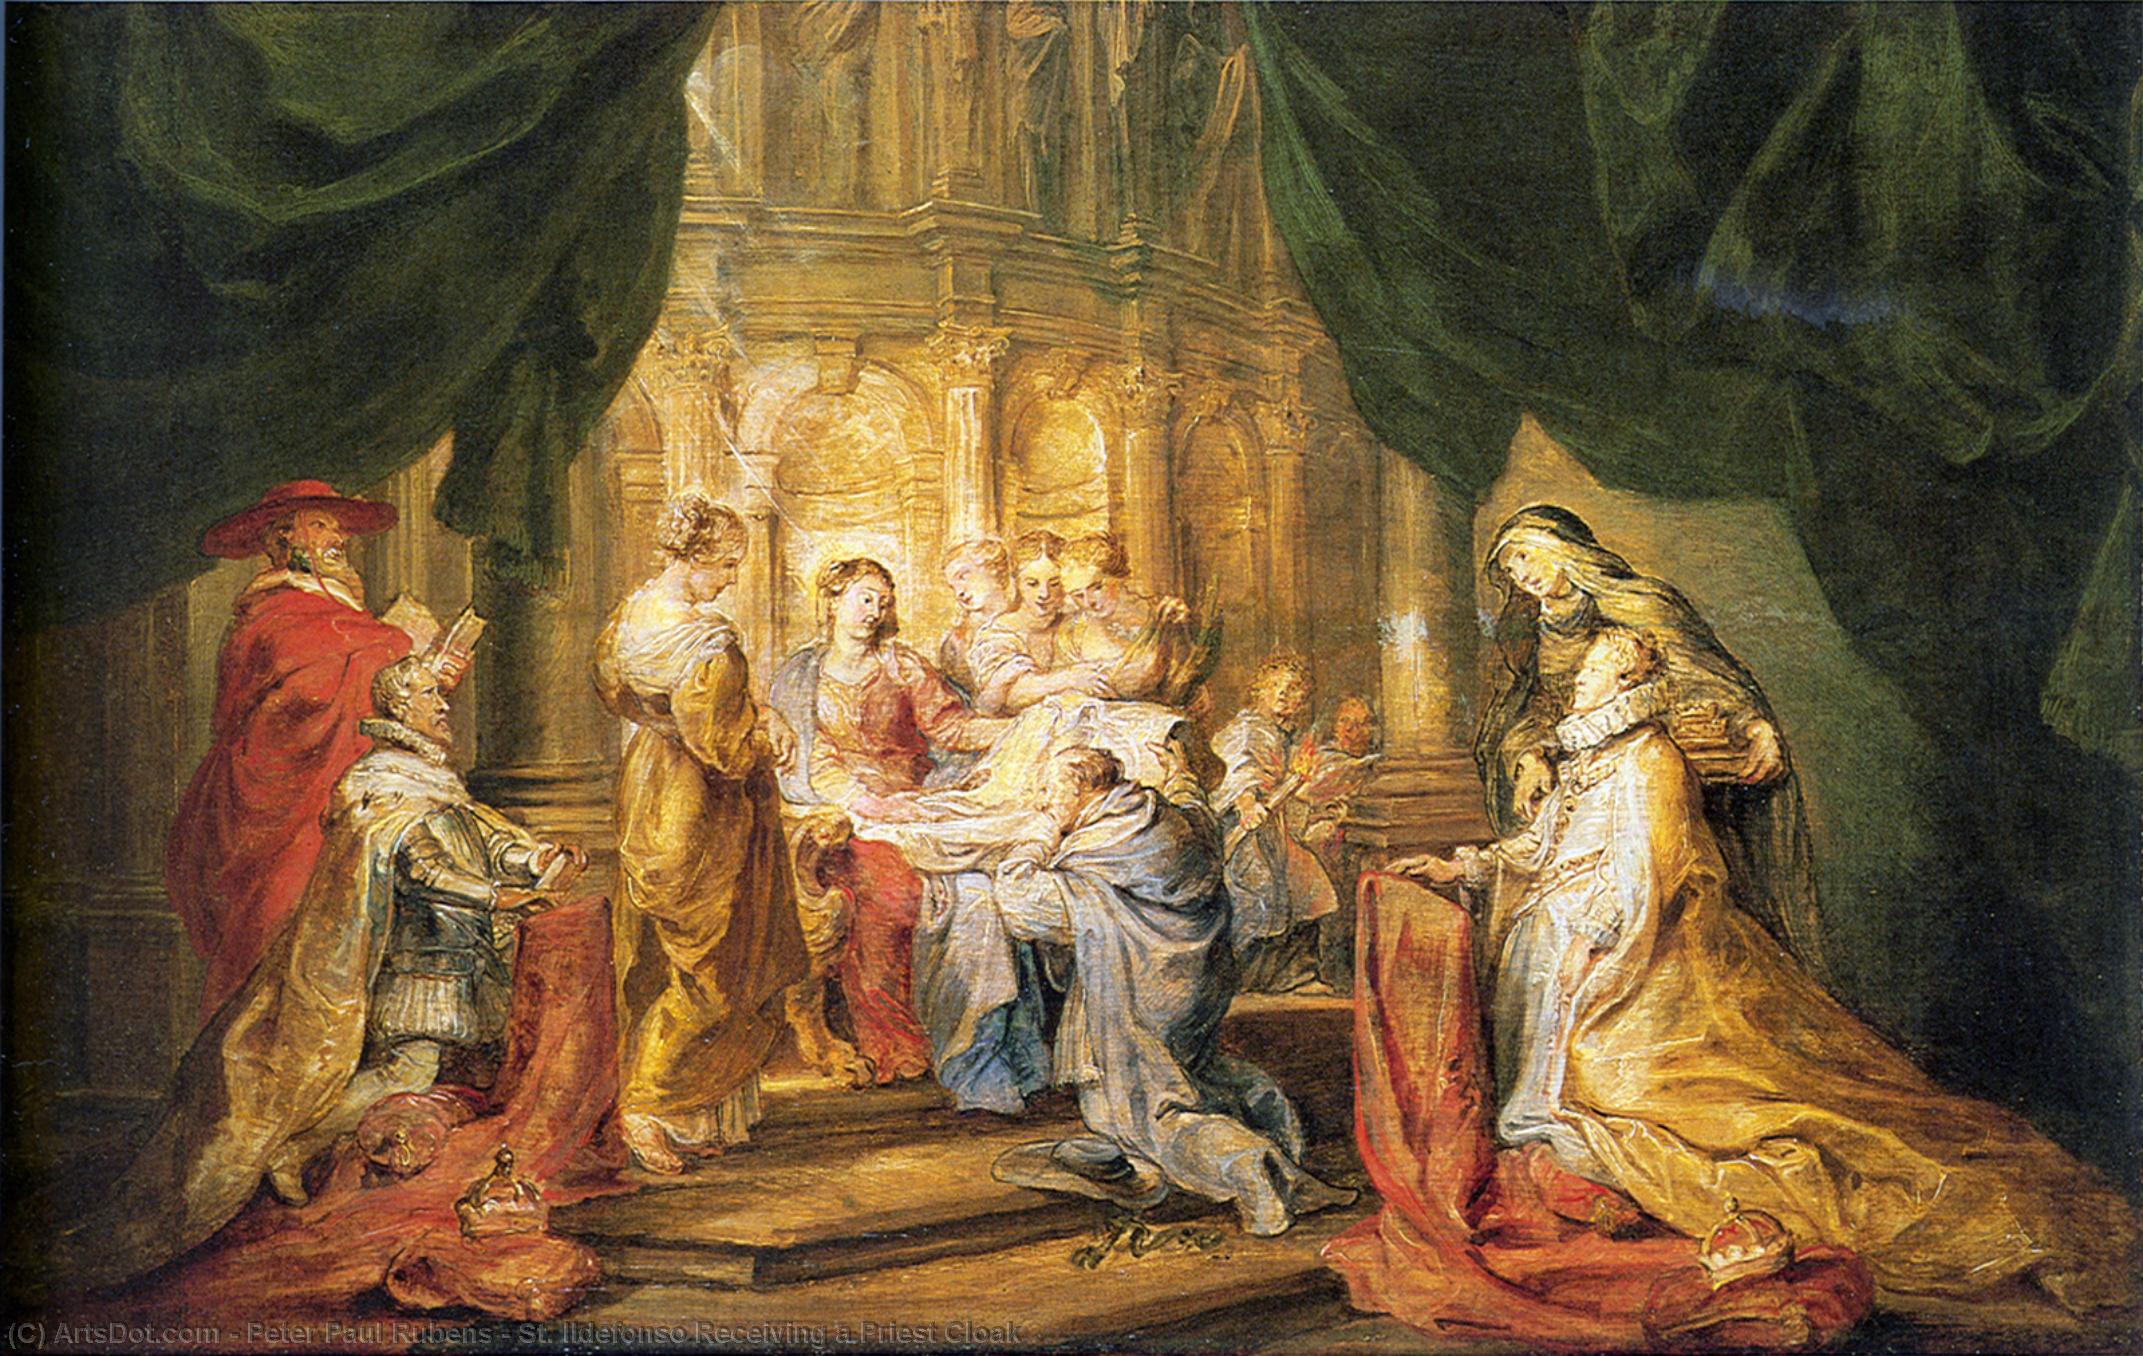 WikiOO.org - Encyclopedia of Fine Arts - Malba, Artwork Peter Paul Rubens - St. Ildefonso Receiving a Priest Cloak